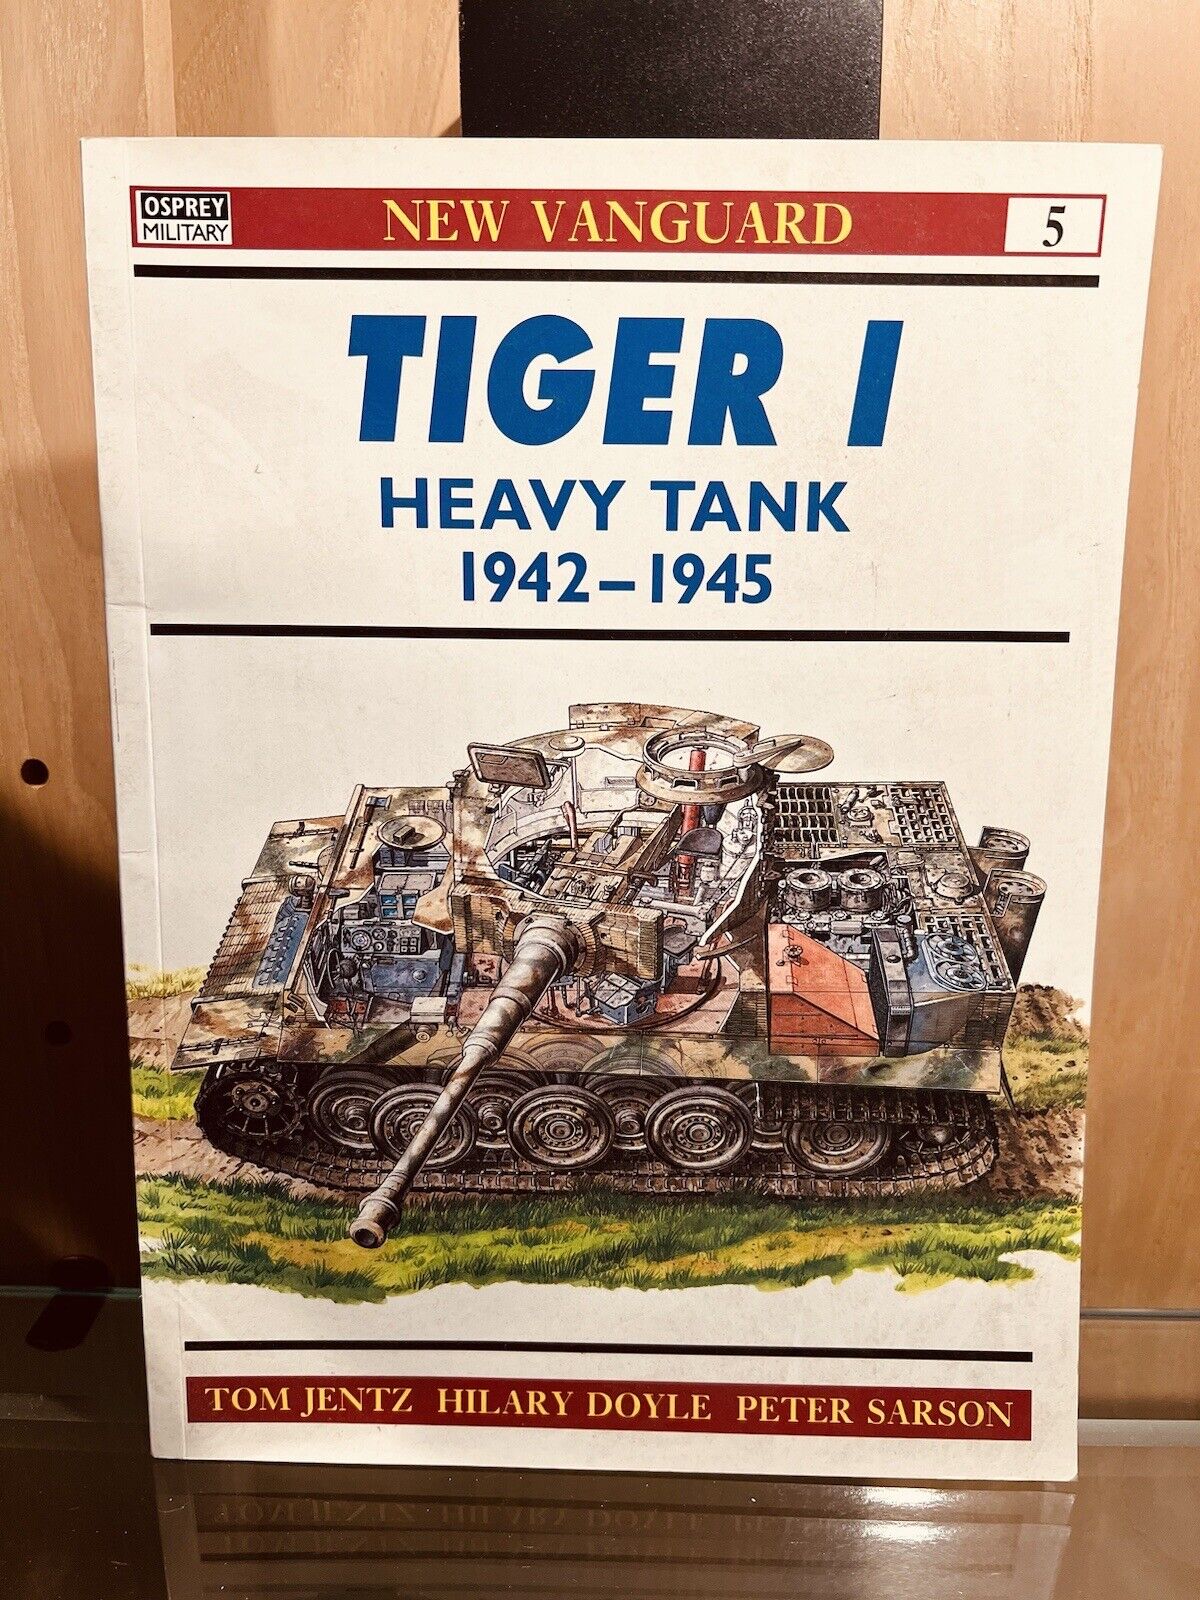 WW11 German Tank Book